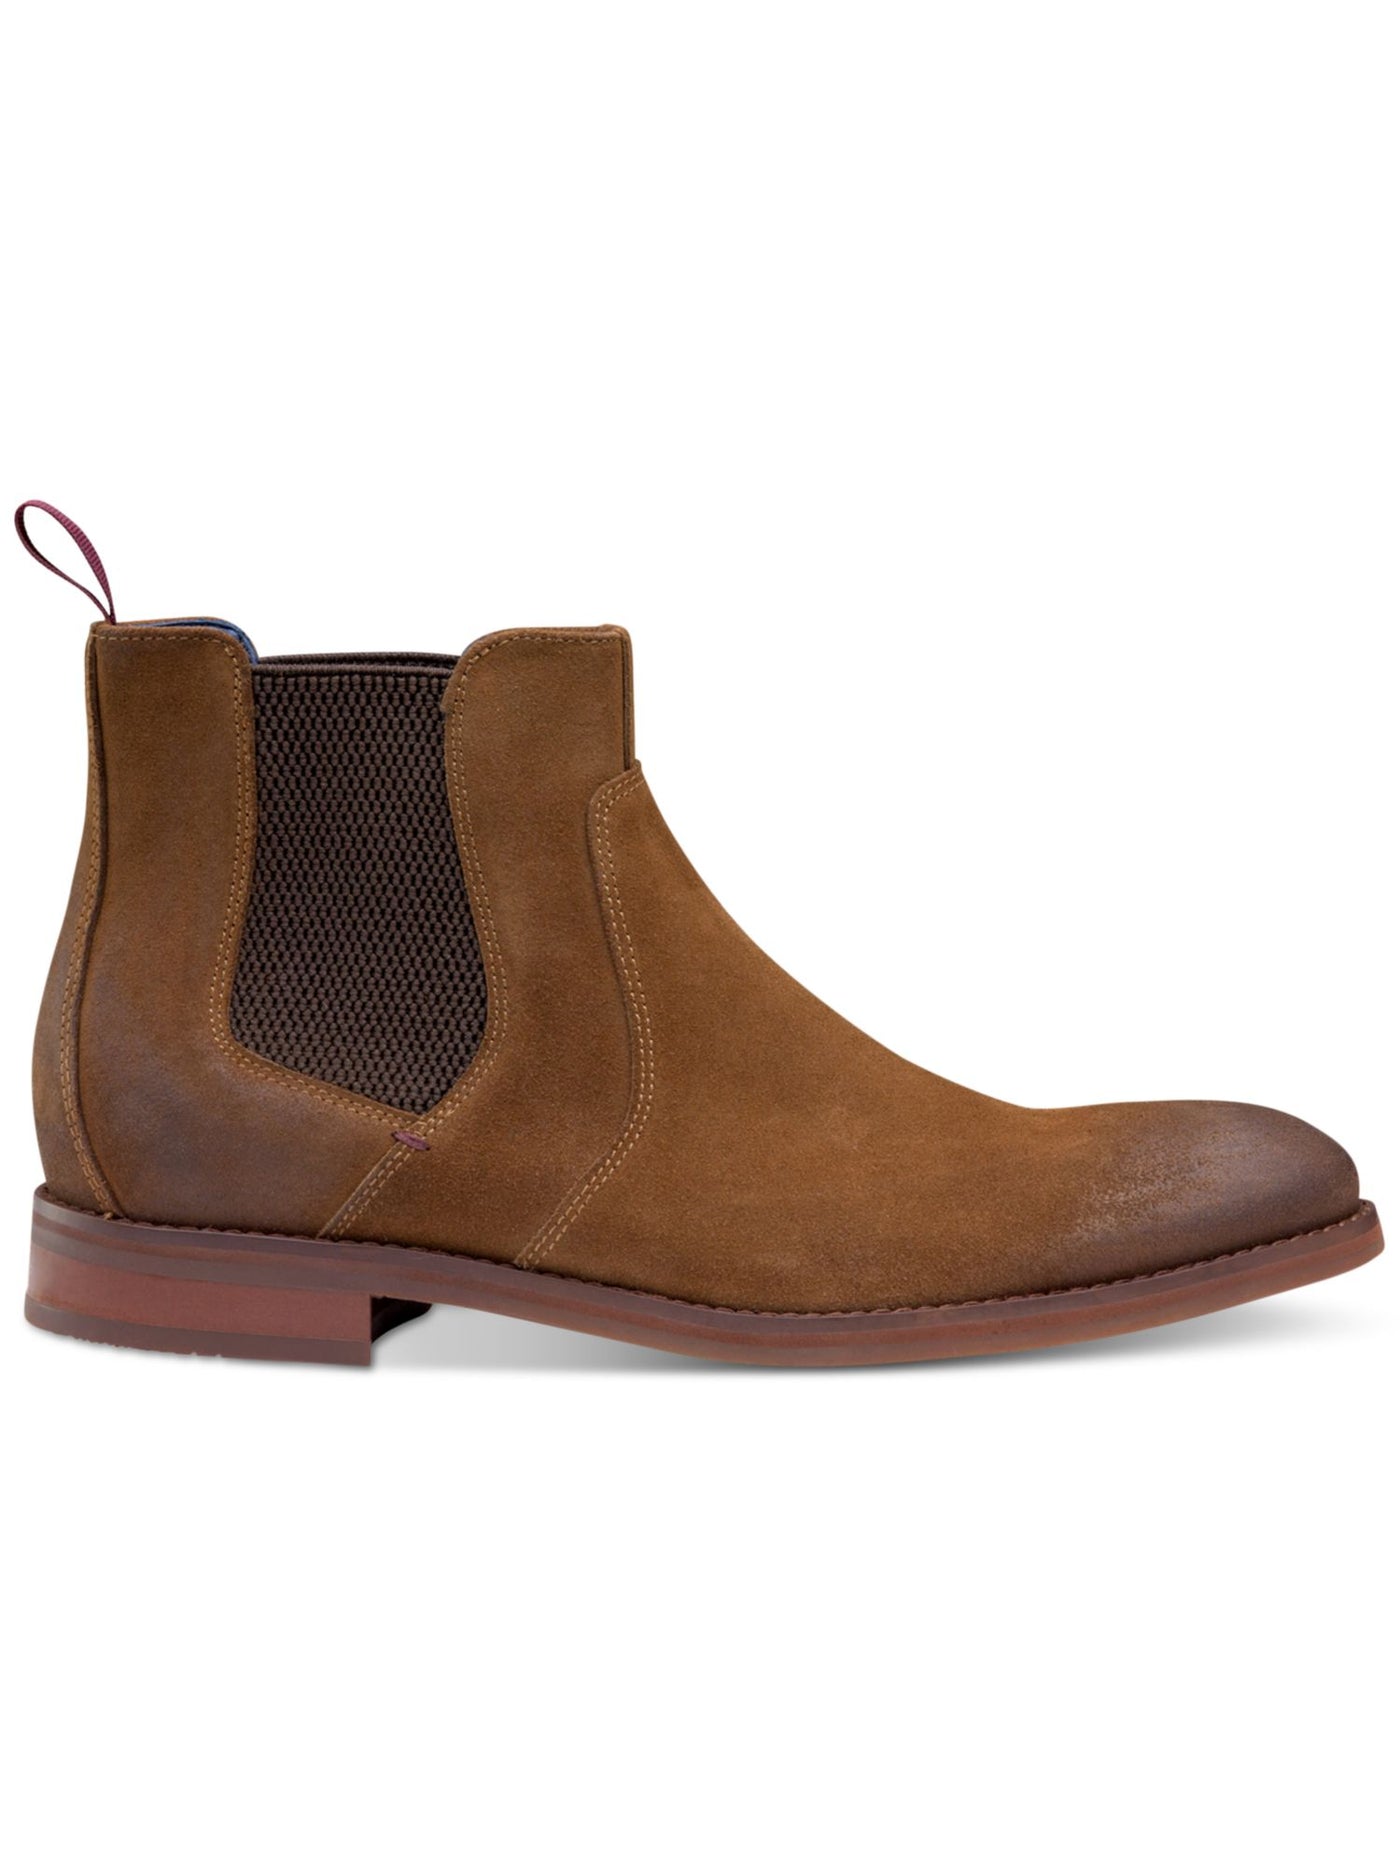 JOHNSTON & MURPHY Mens Brown Goring Comfort Danby Round Toe Block Heel Leather Boots 10 M